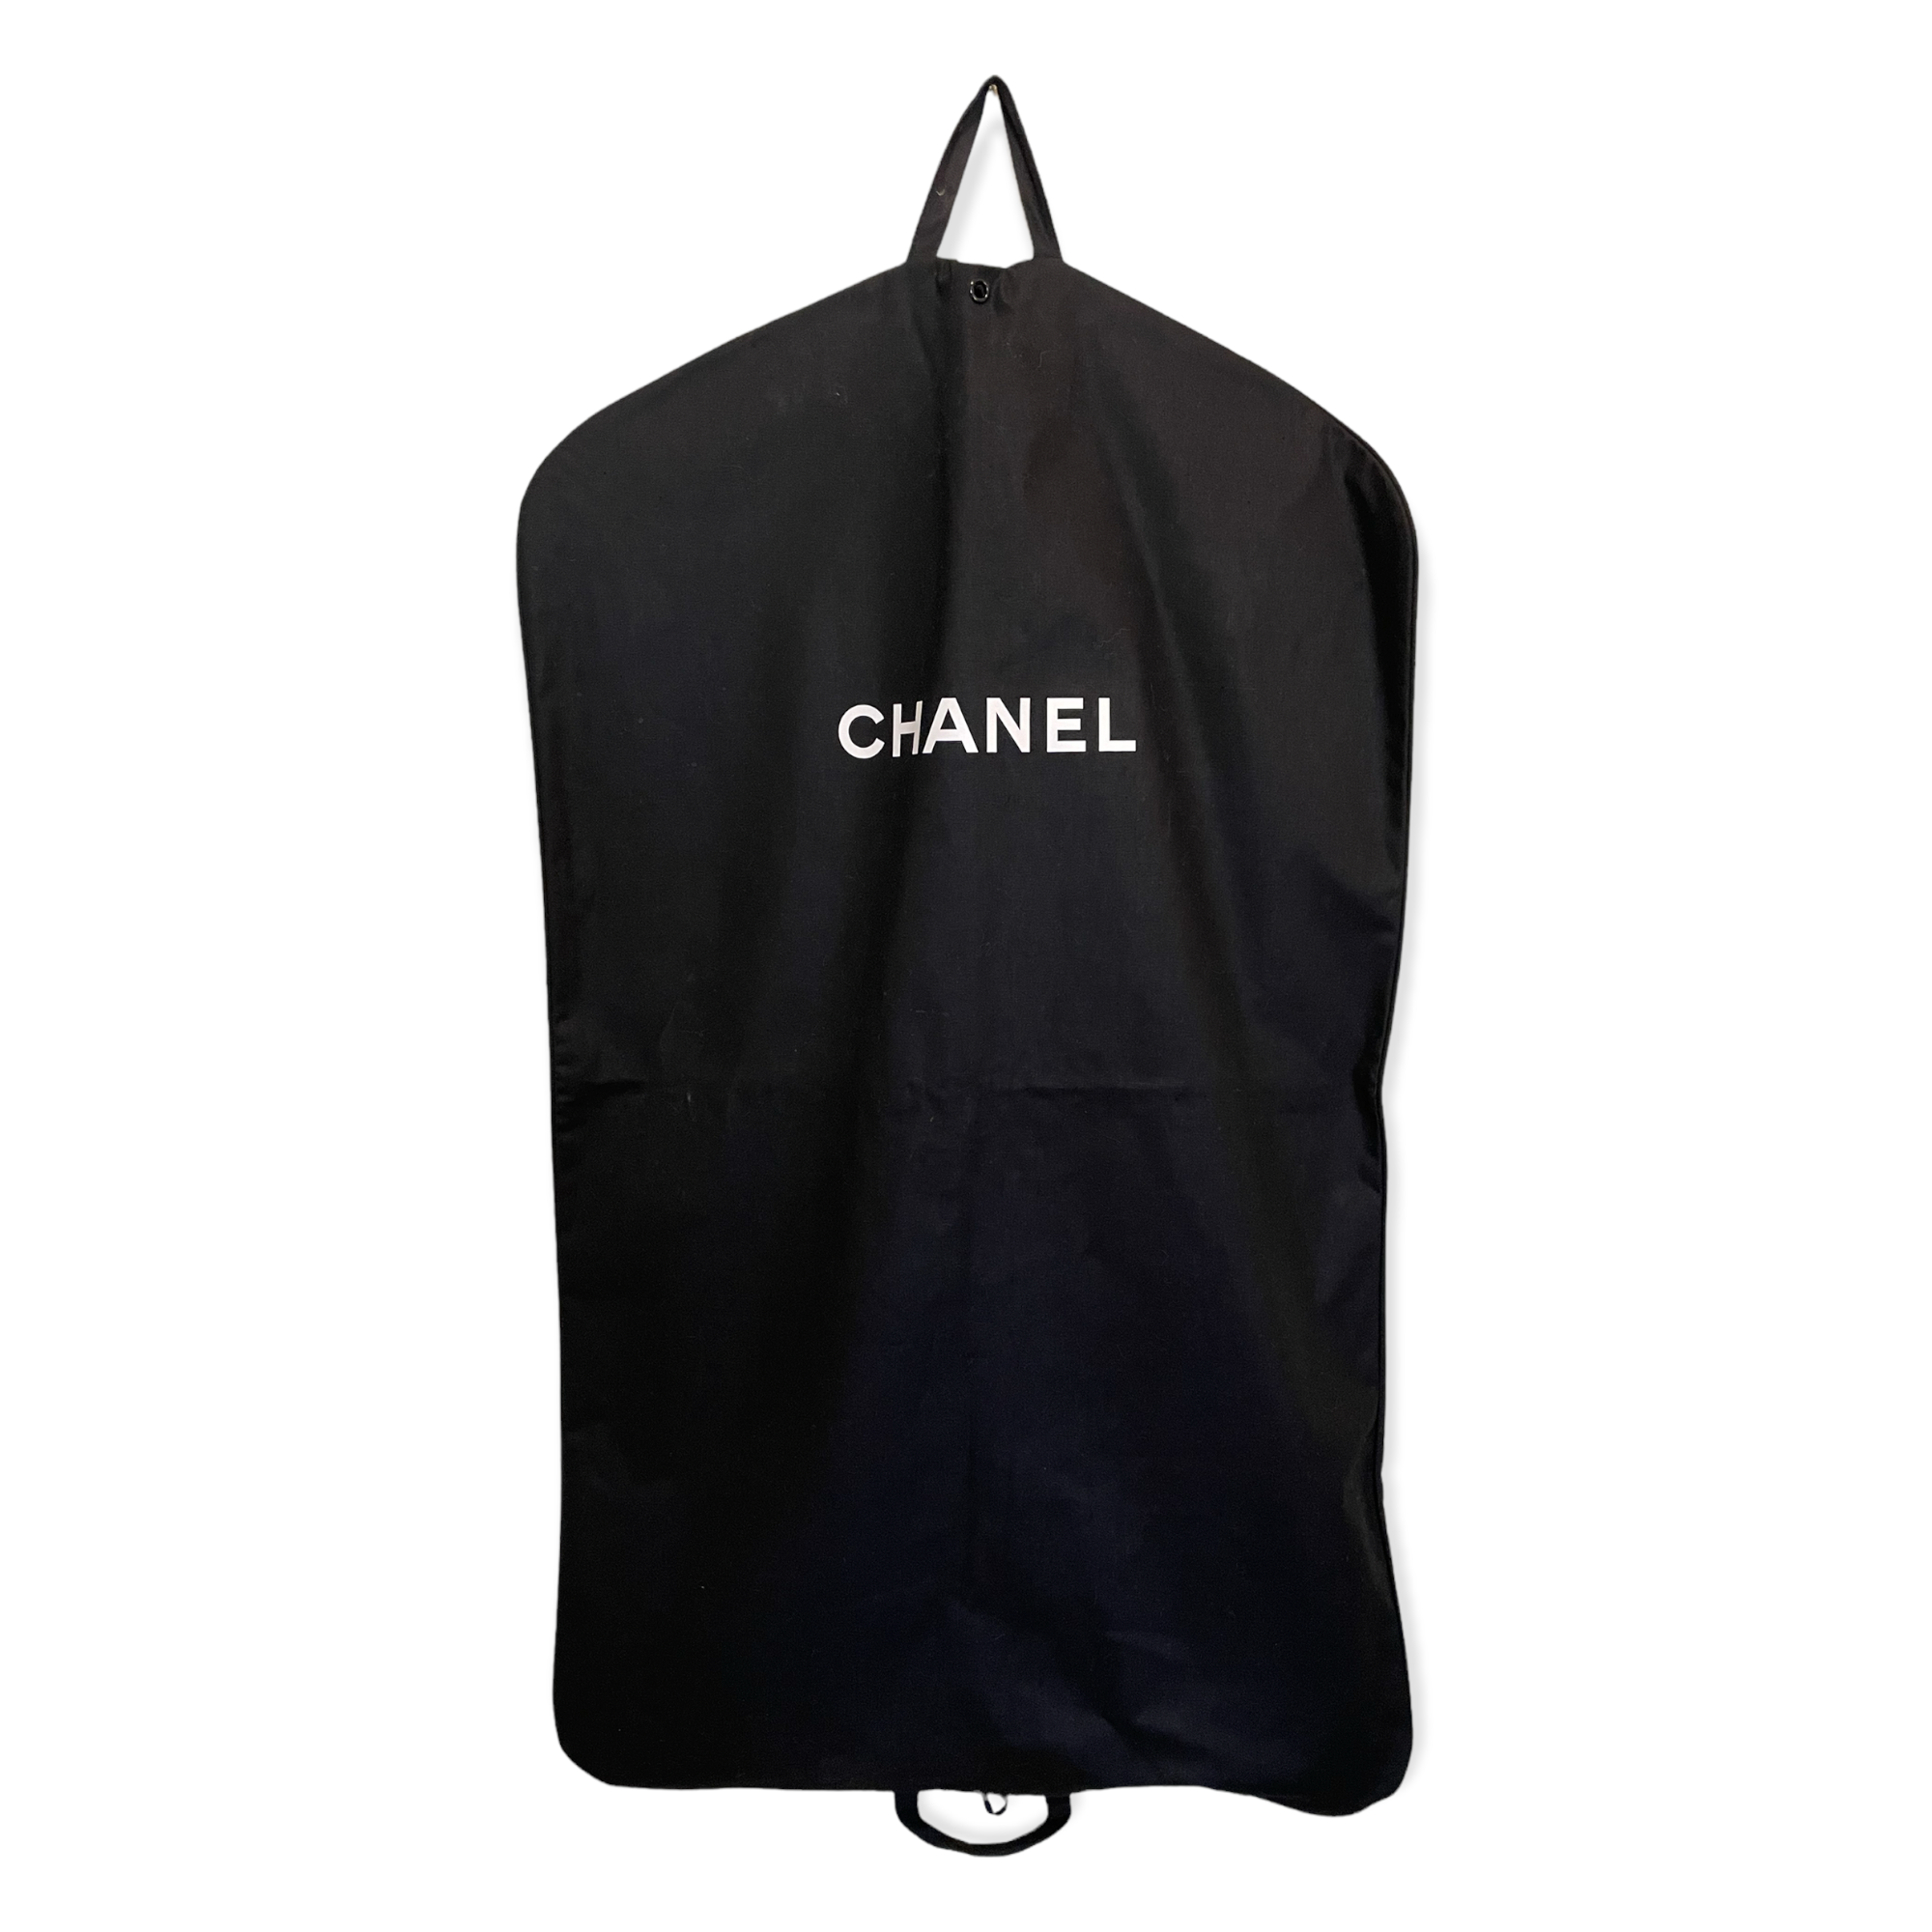 CHANEL Large Garment Bag